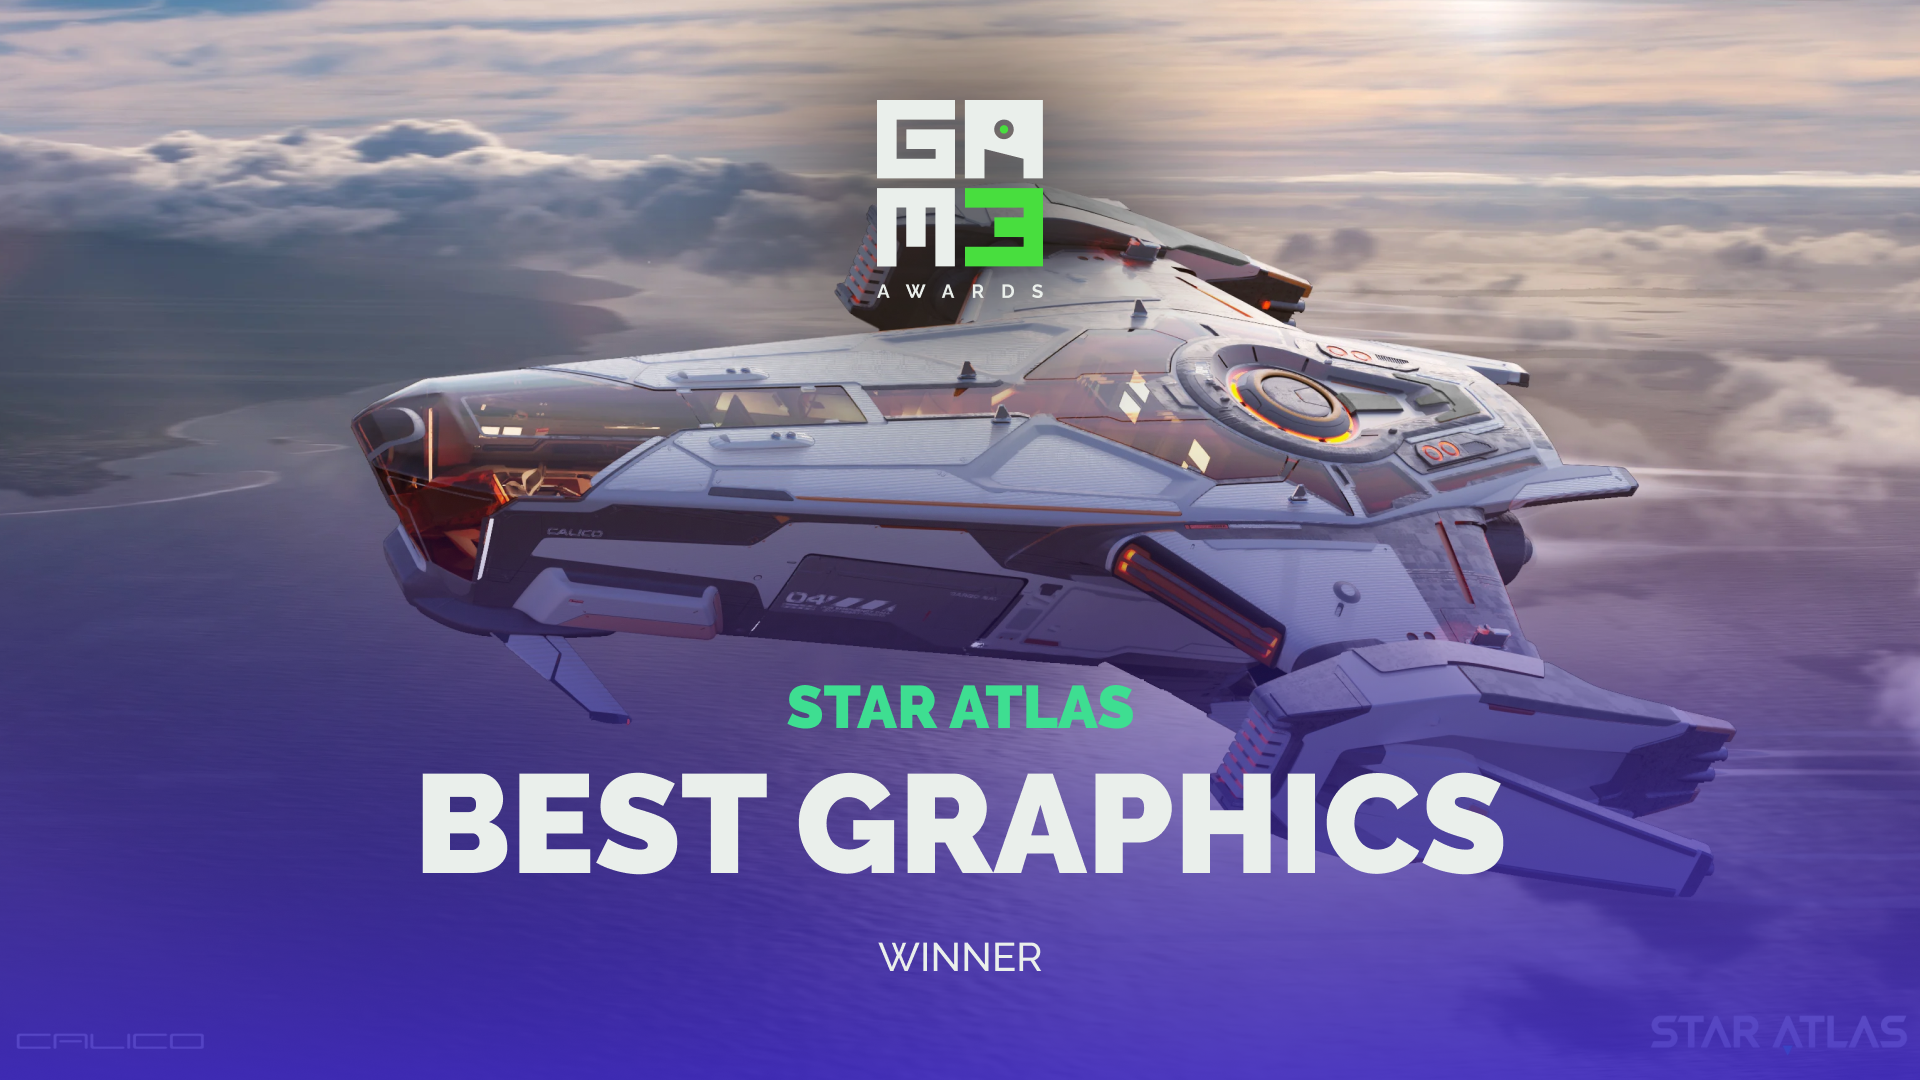 winner_star atlas_best graphics.png